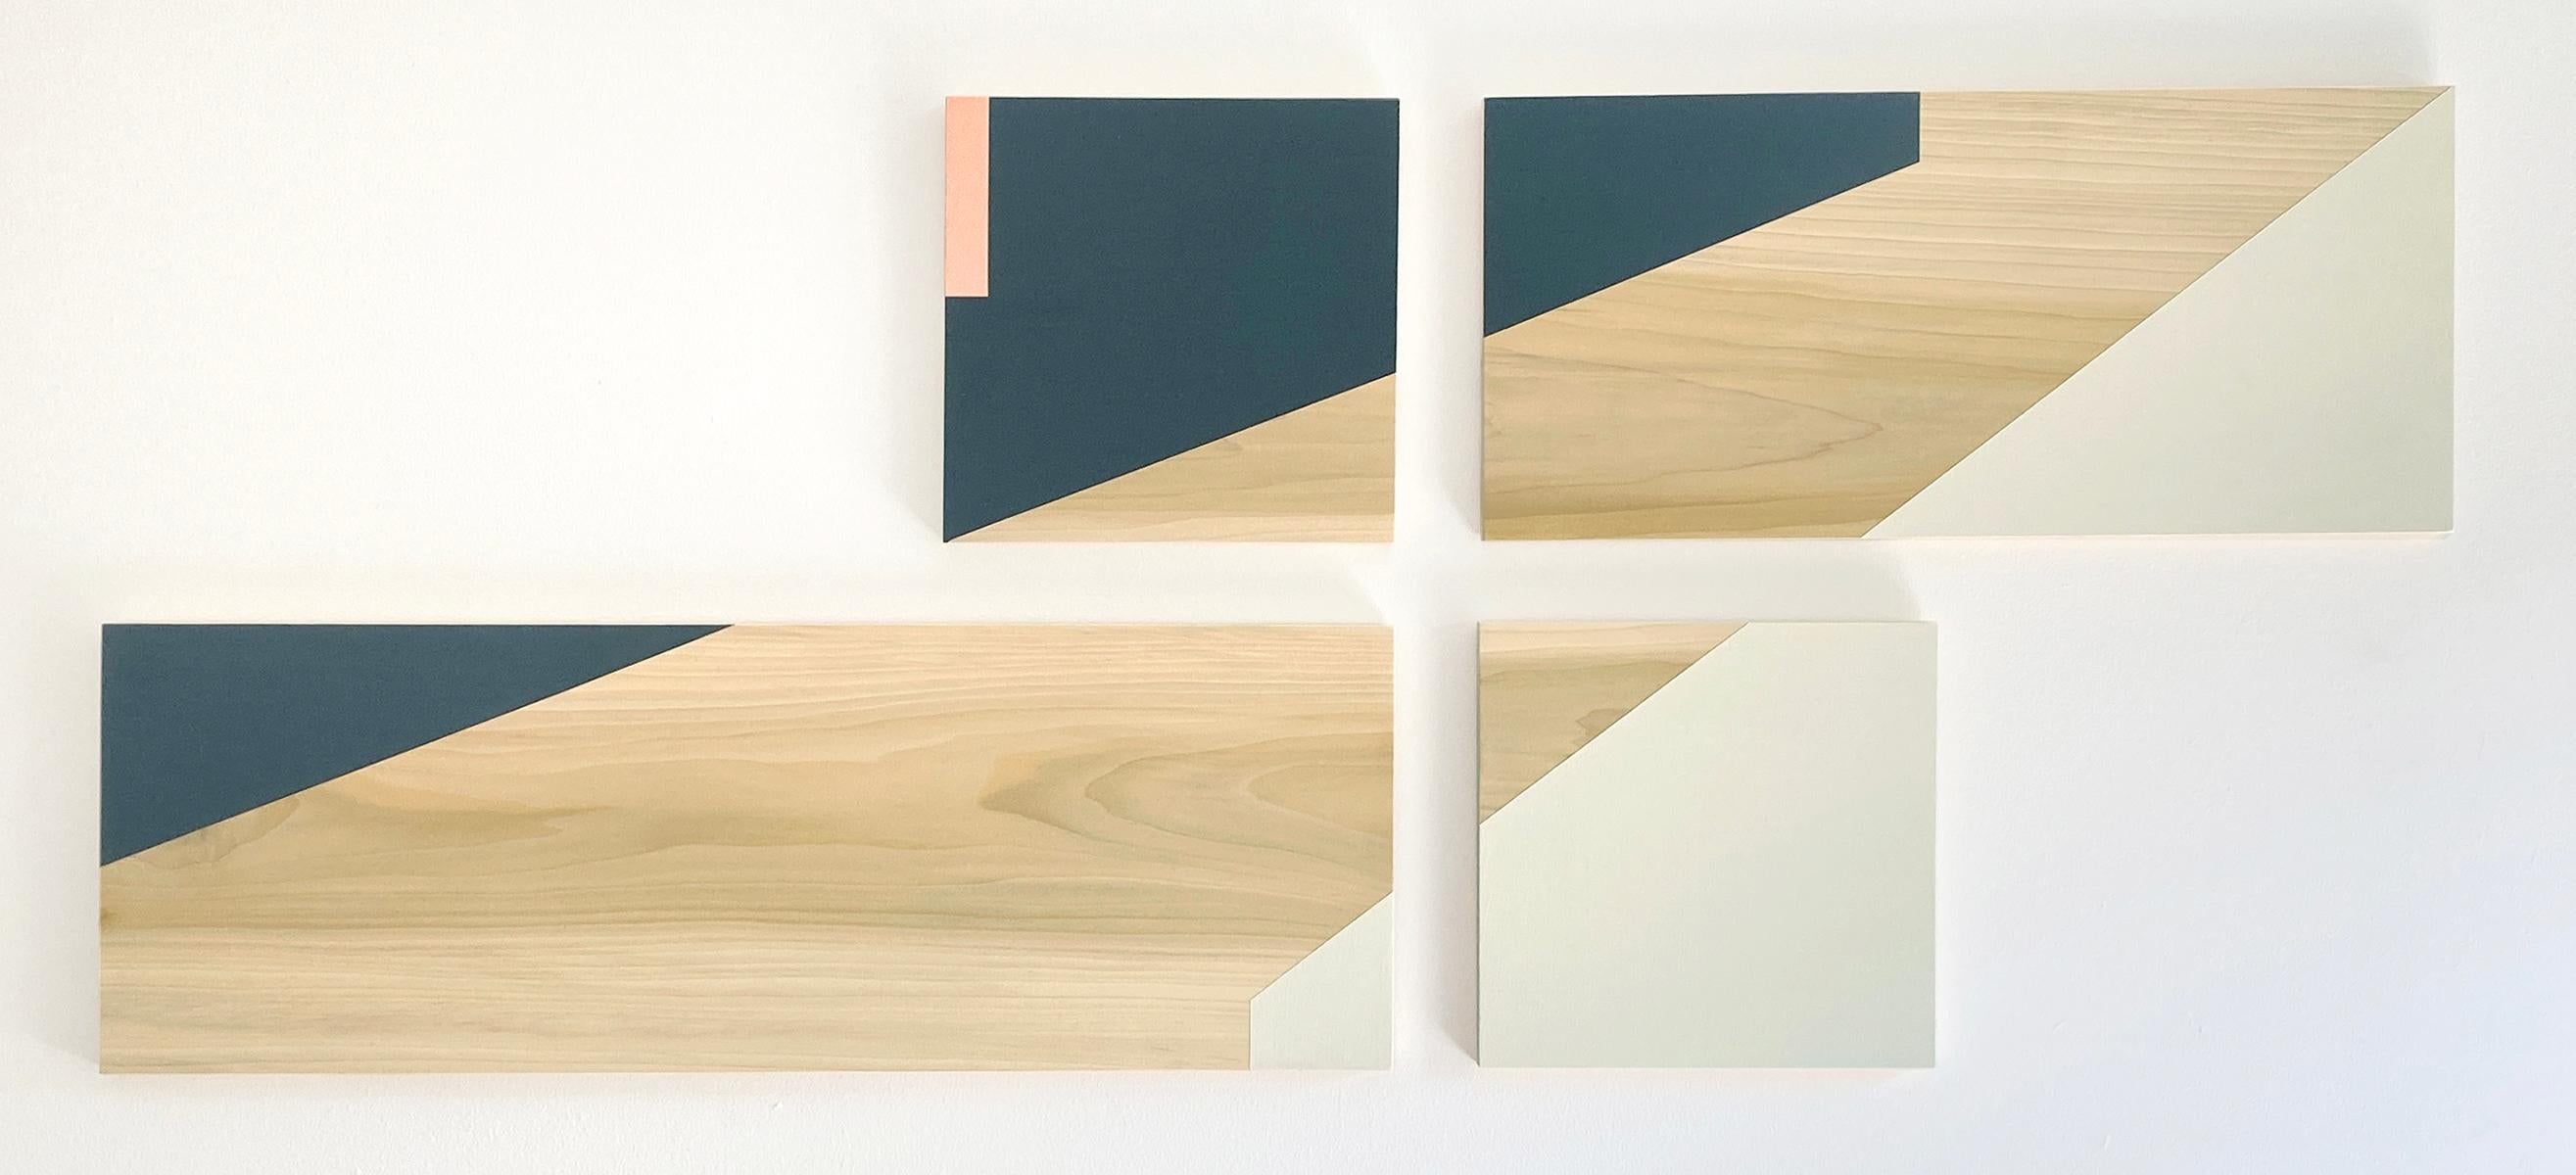 'Point of View' colorful minimalist work on panel, wood grain, Carmen Herrera